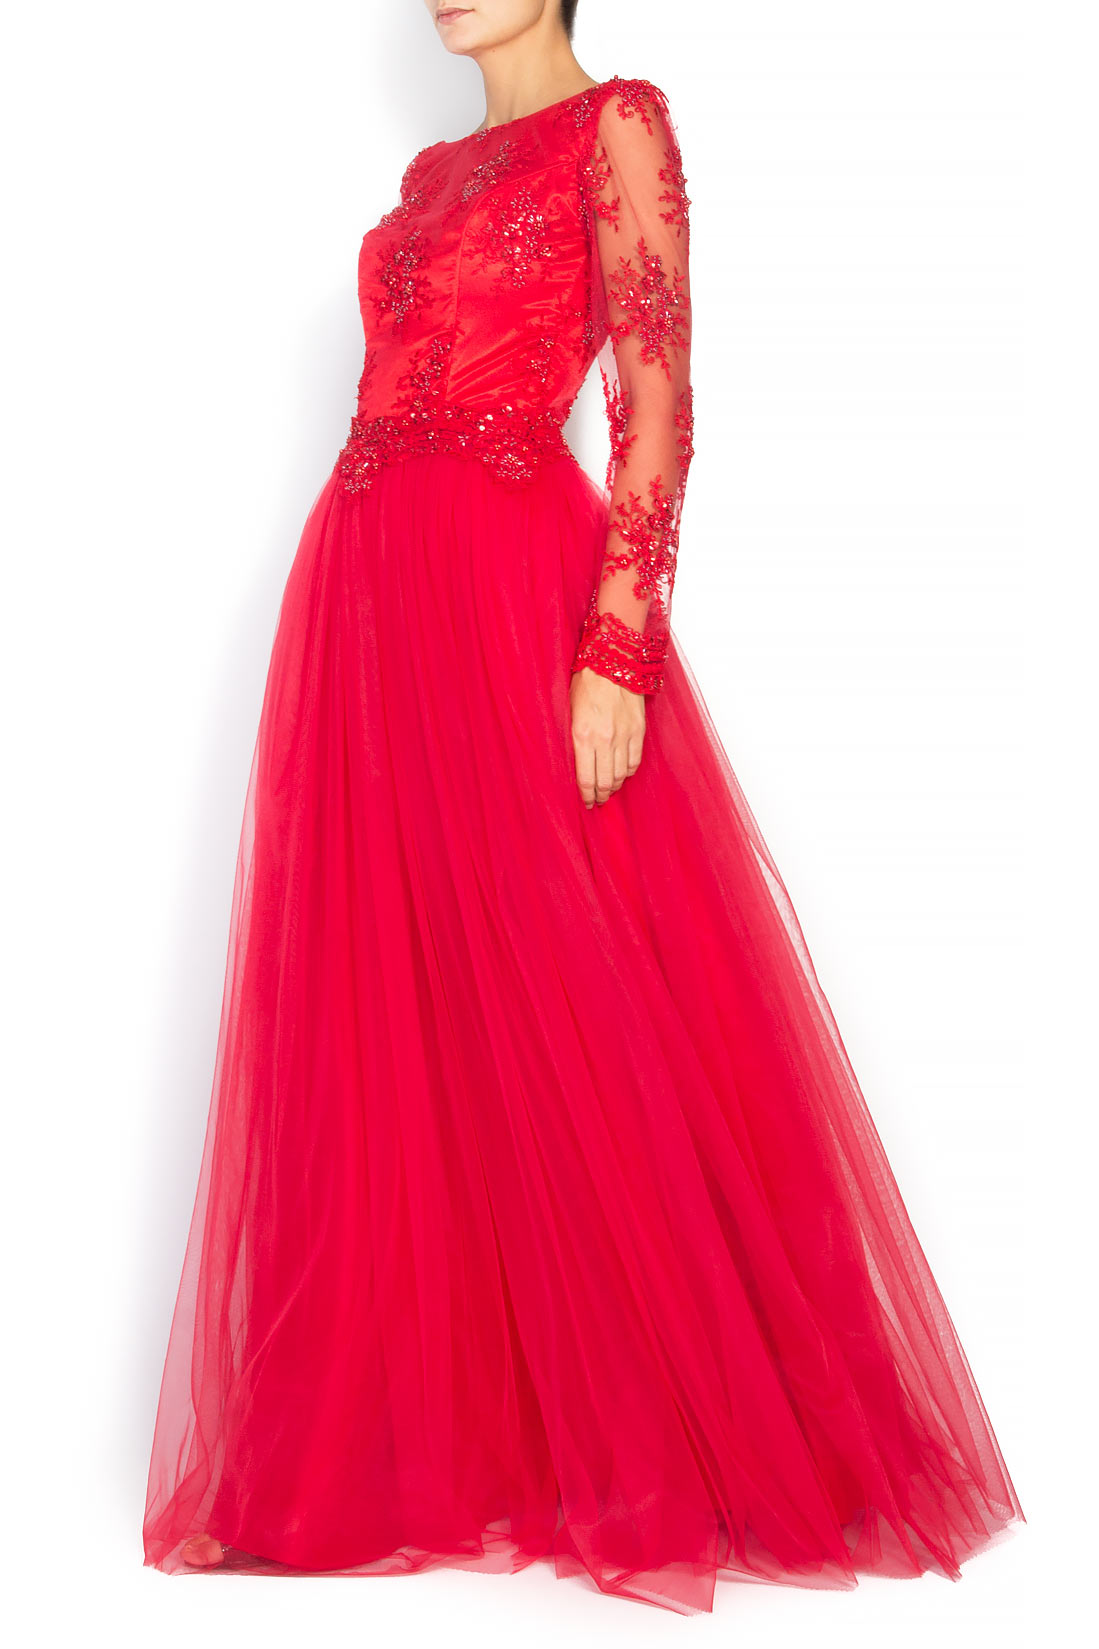 'Ruby Red' tulle and lace maxi dress Raffaela Moraru image 1